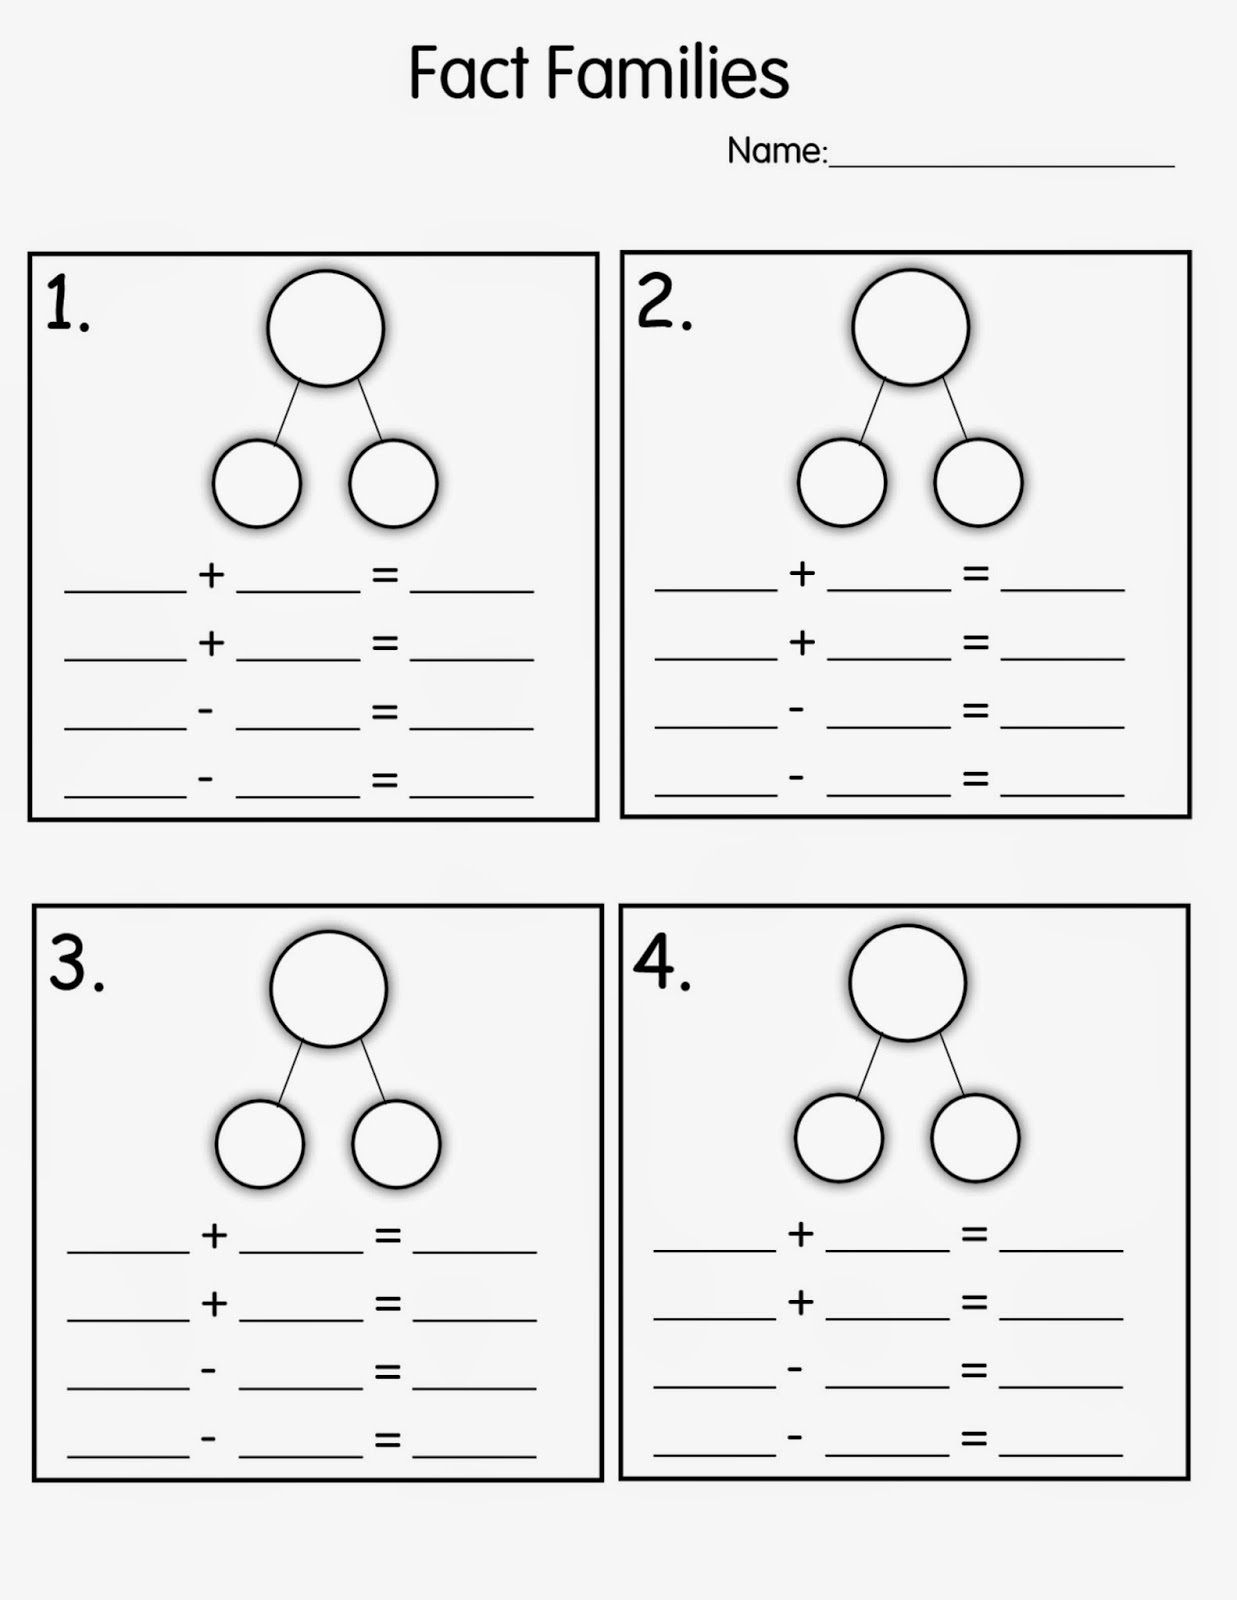 Number Family Worksheets For Kids | Math Worksheets For Kids - Free Printable Number Bond Template